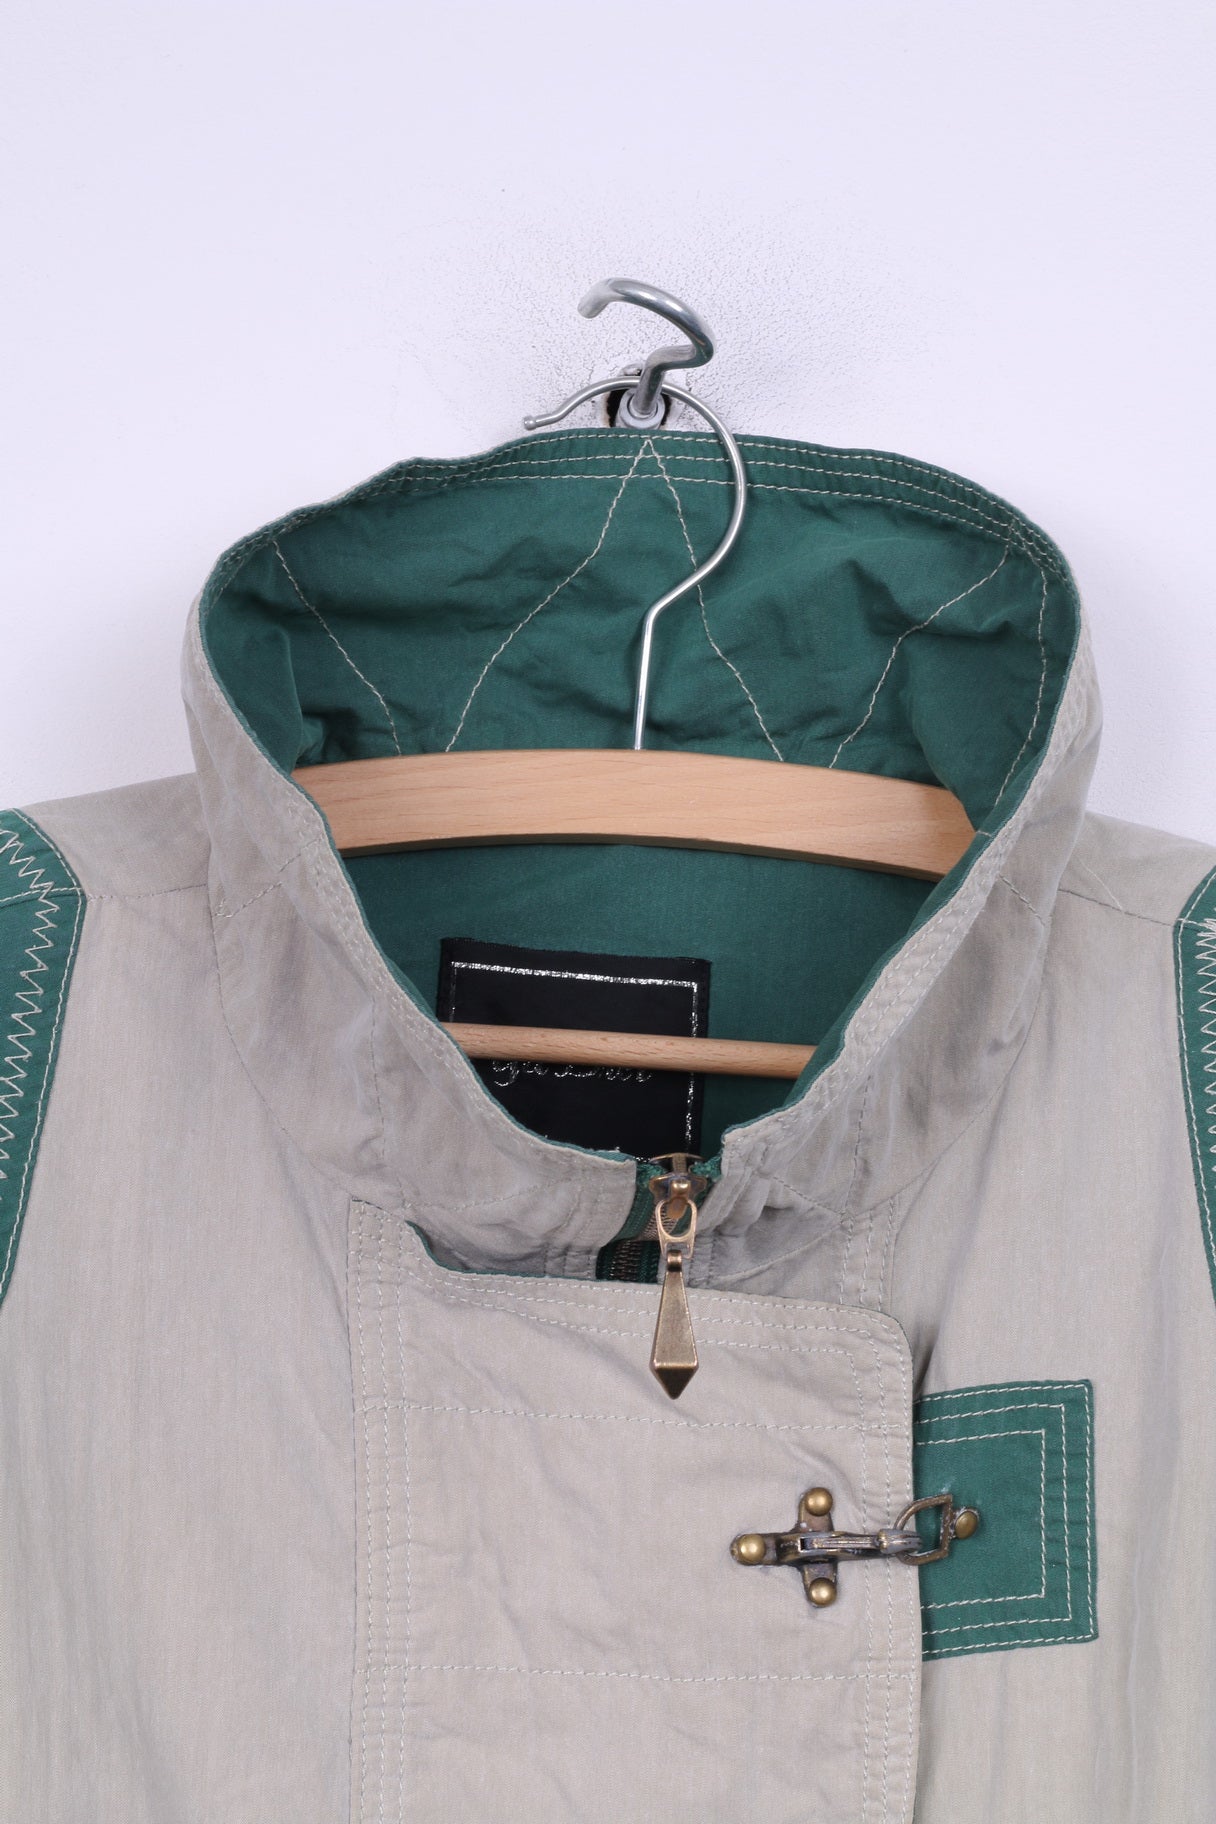 Gil Bret Womens 16 XL Long Jacket Lightweight Cotton Nylon Full Zipper Beige/Green Shoulder Pads Vintage